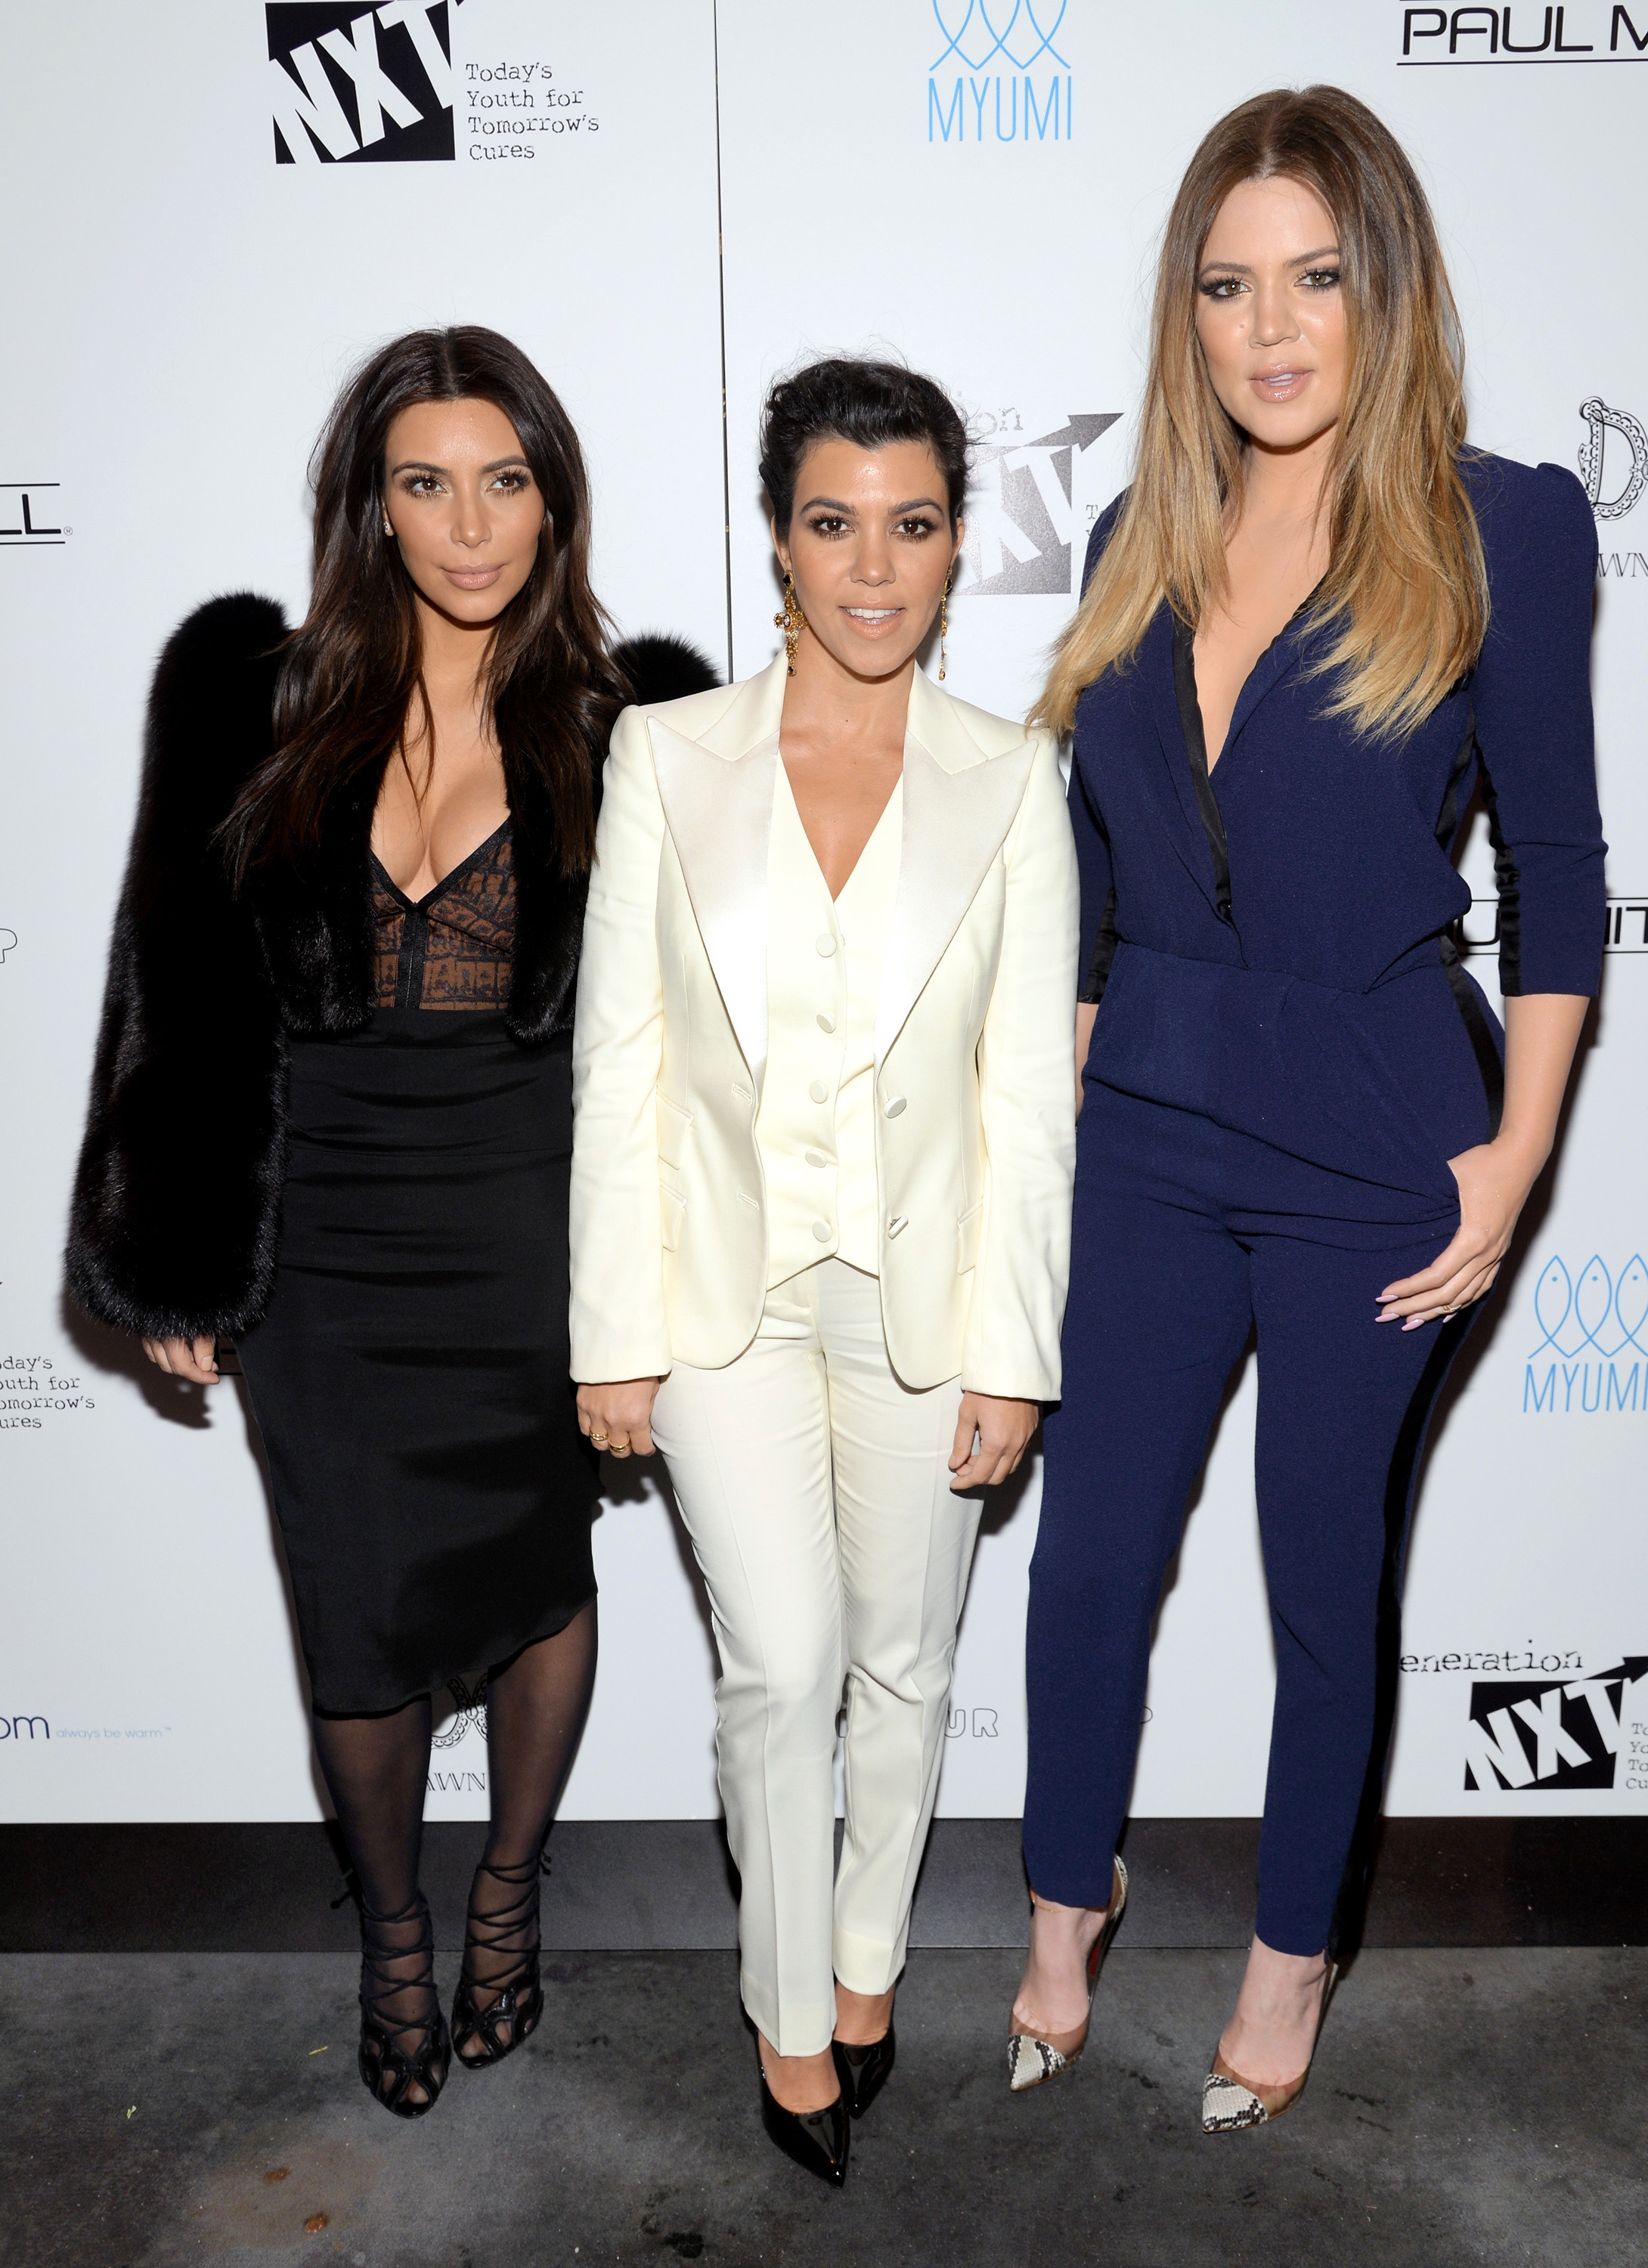 Television personalities Kim Kardashian, left, Kourtney Kardashian and Khloe Kardashian Odom, right, attend a Generation NXT Dream Foundation benefit event in New York on Feb. 16, 2014.